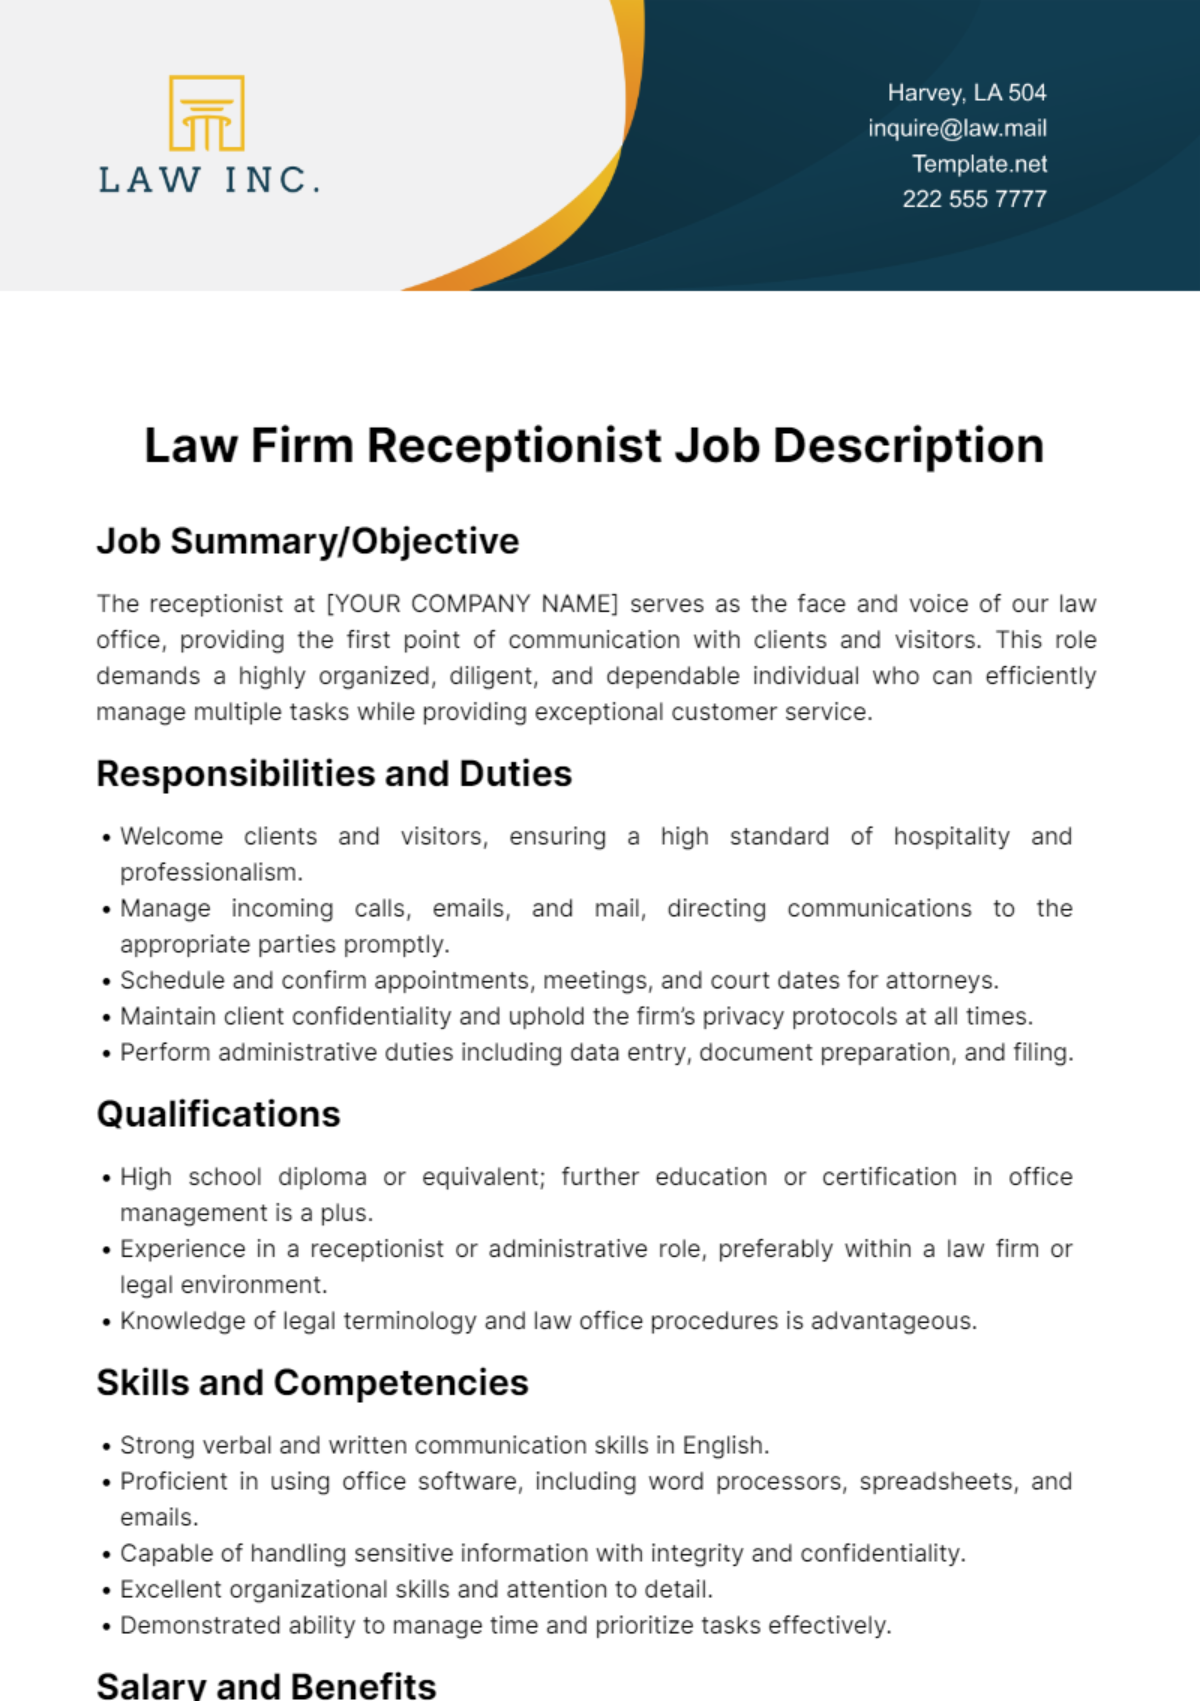 Free Law Firm Receptionist Job Description Template